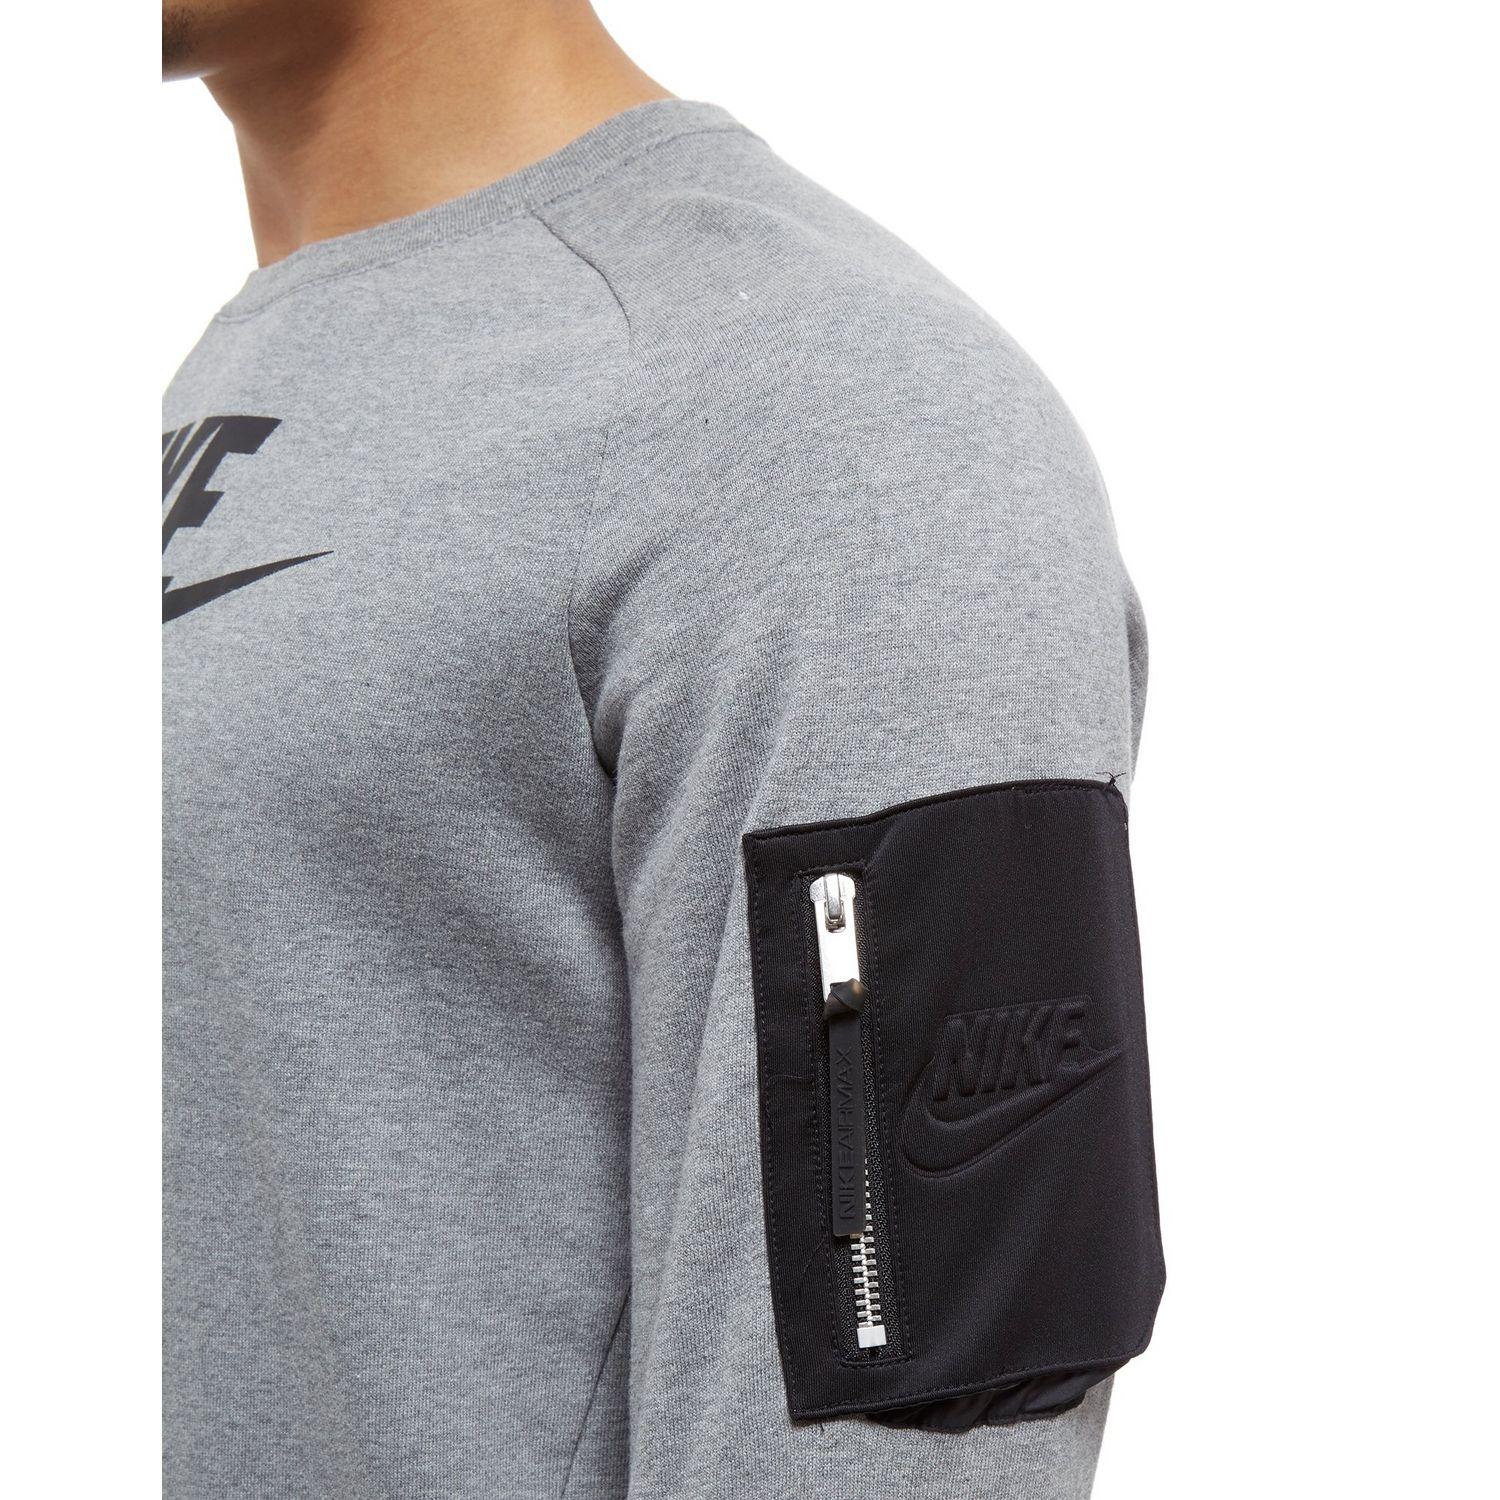 Nike Cotton Air Max Ft Crew Sweatshirt in Grey/Black (Grey) for Men - Lyst